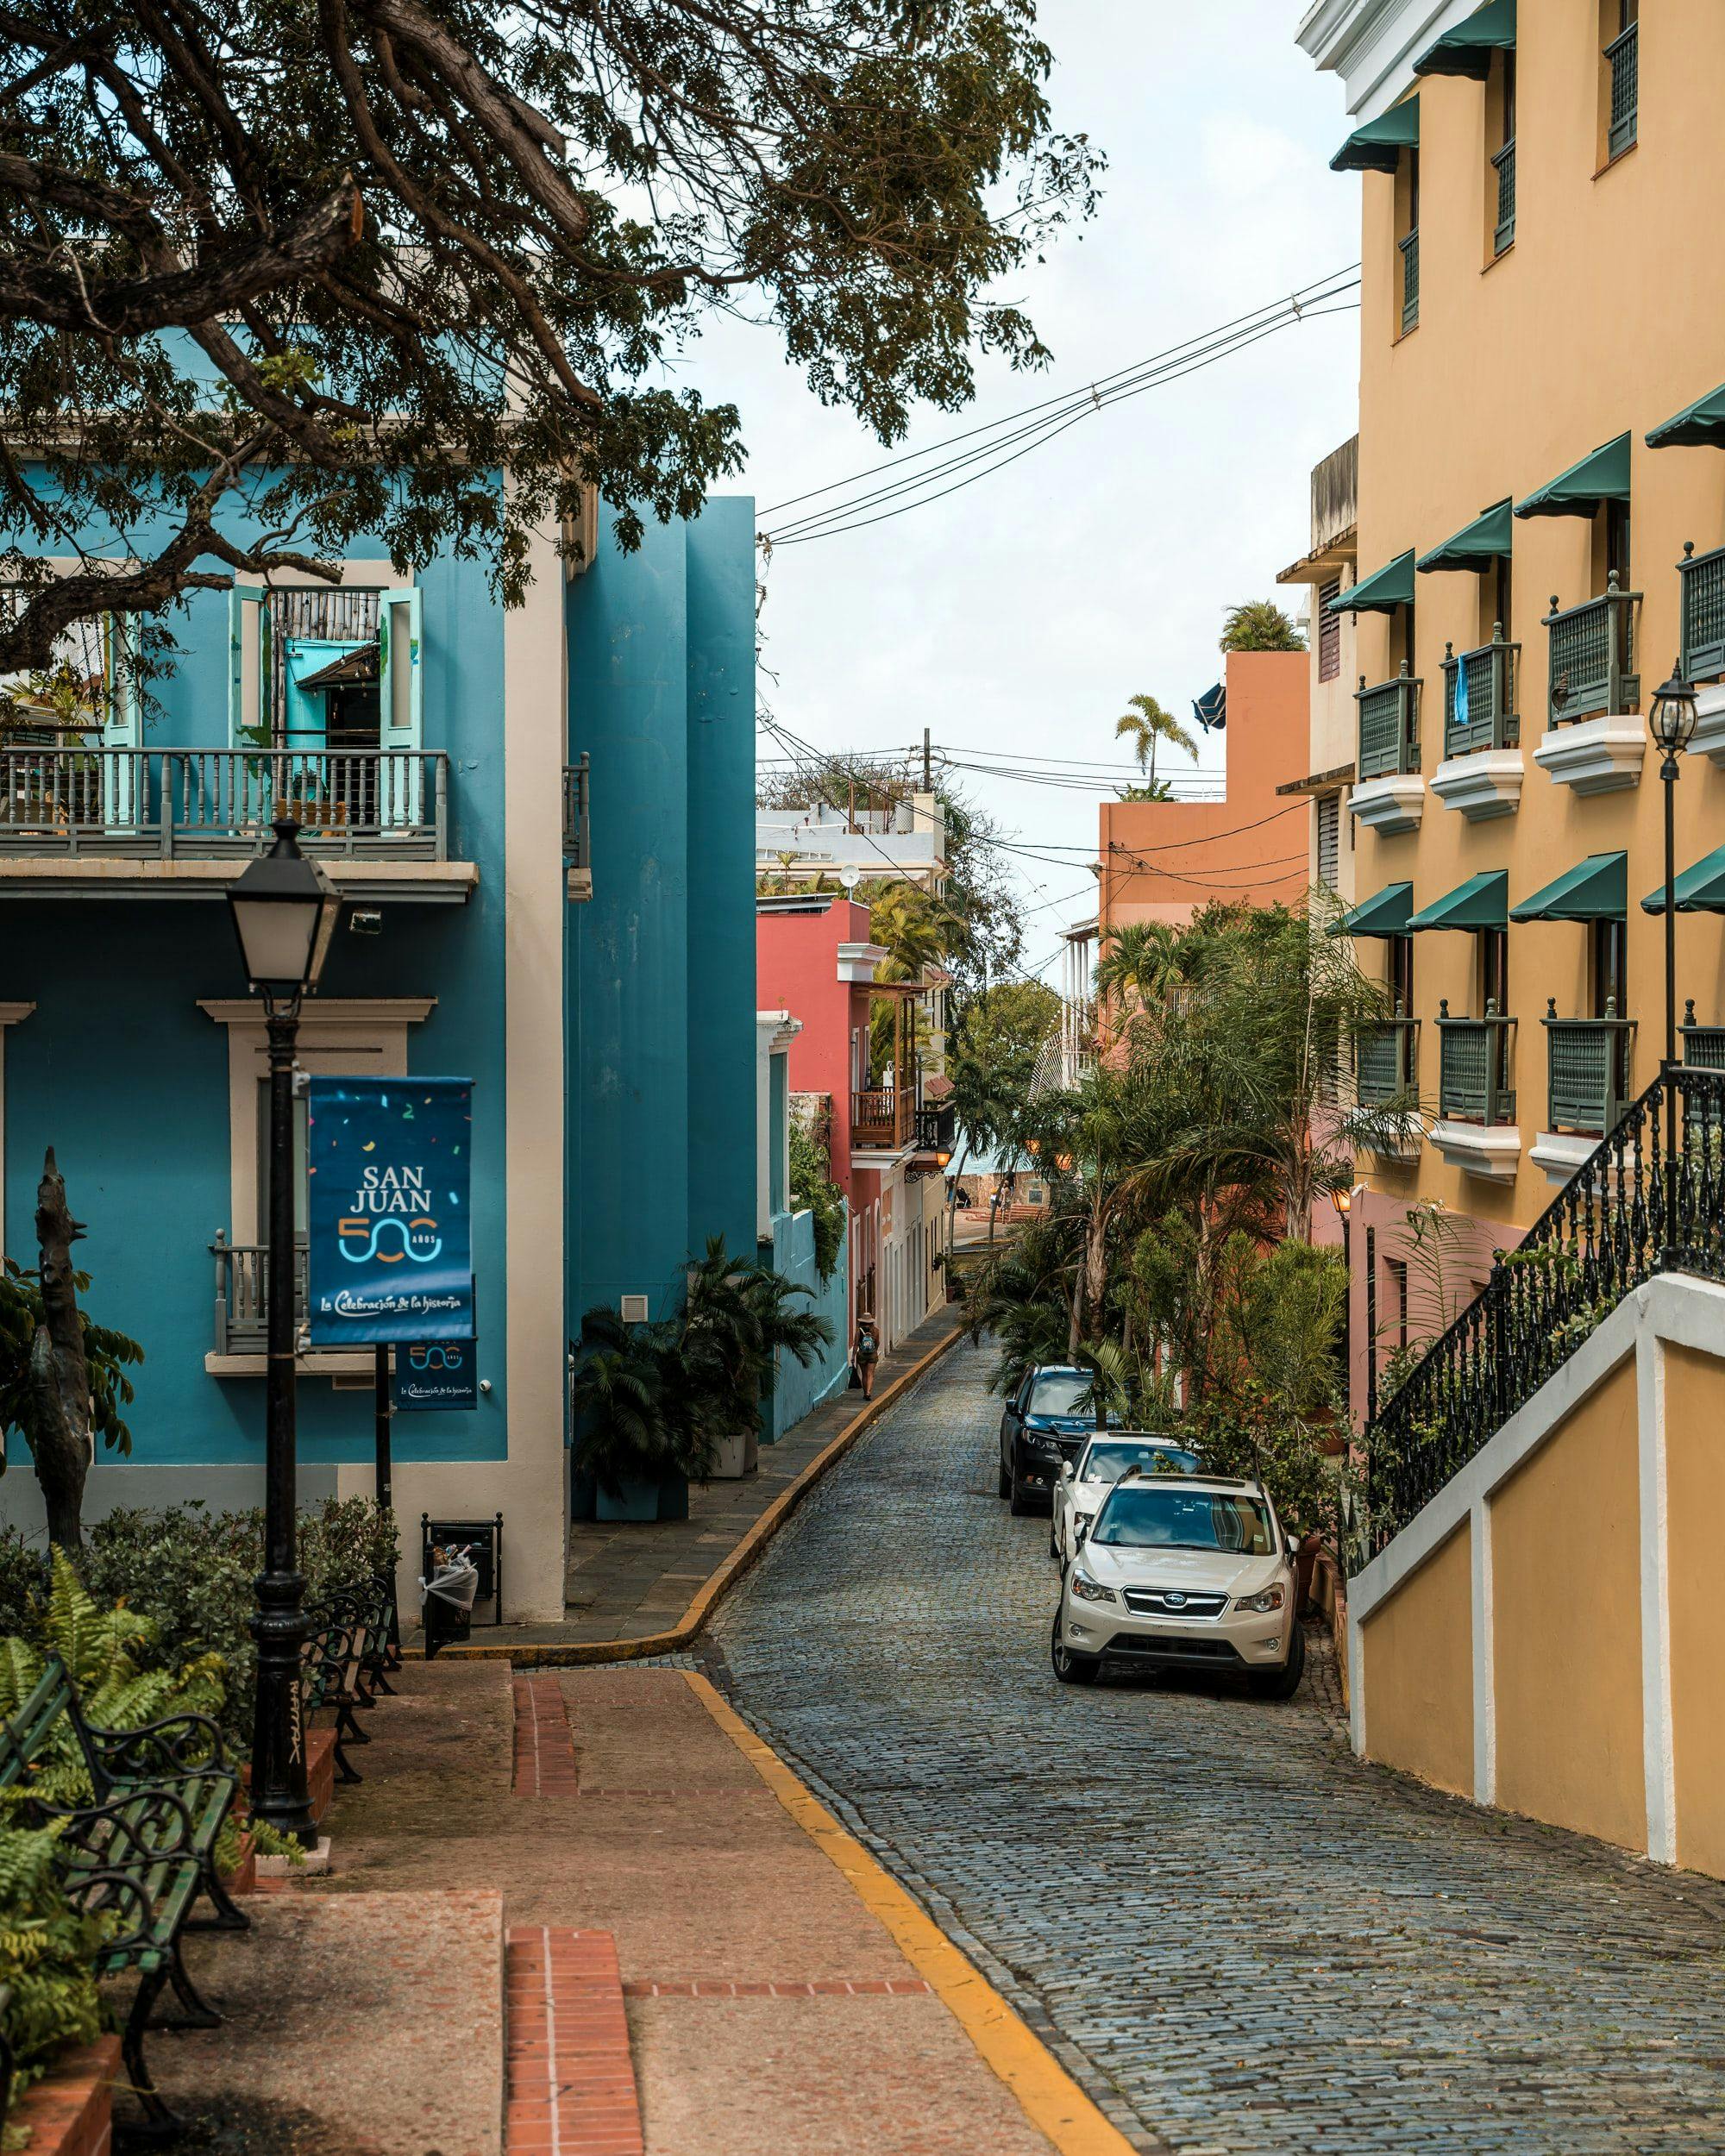 puerto rico tourist visa